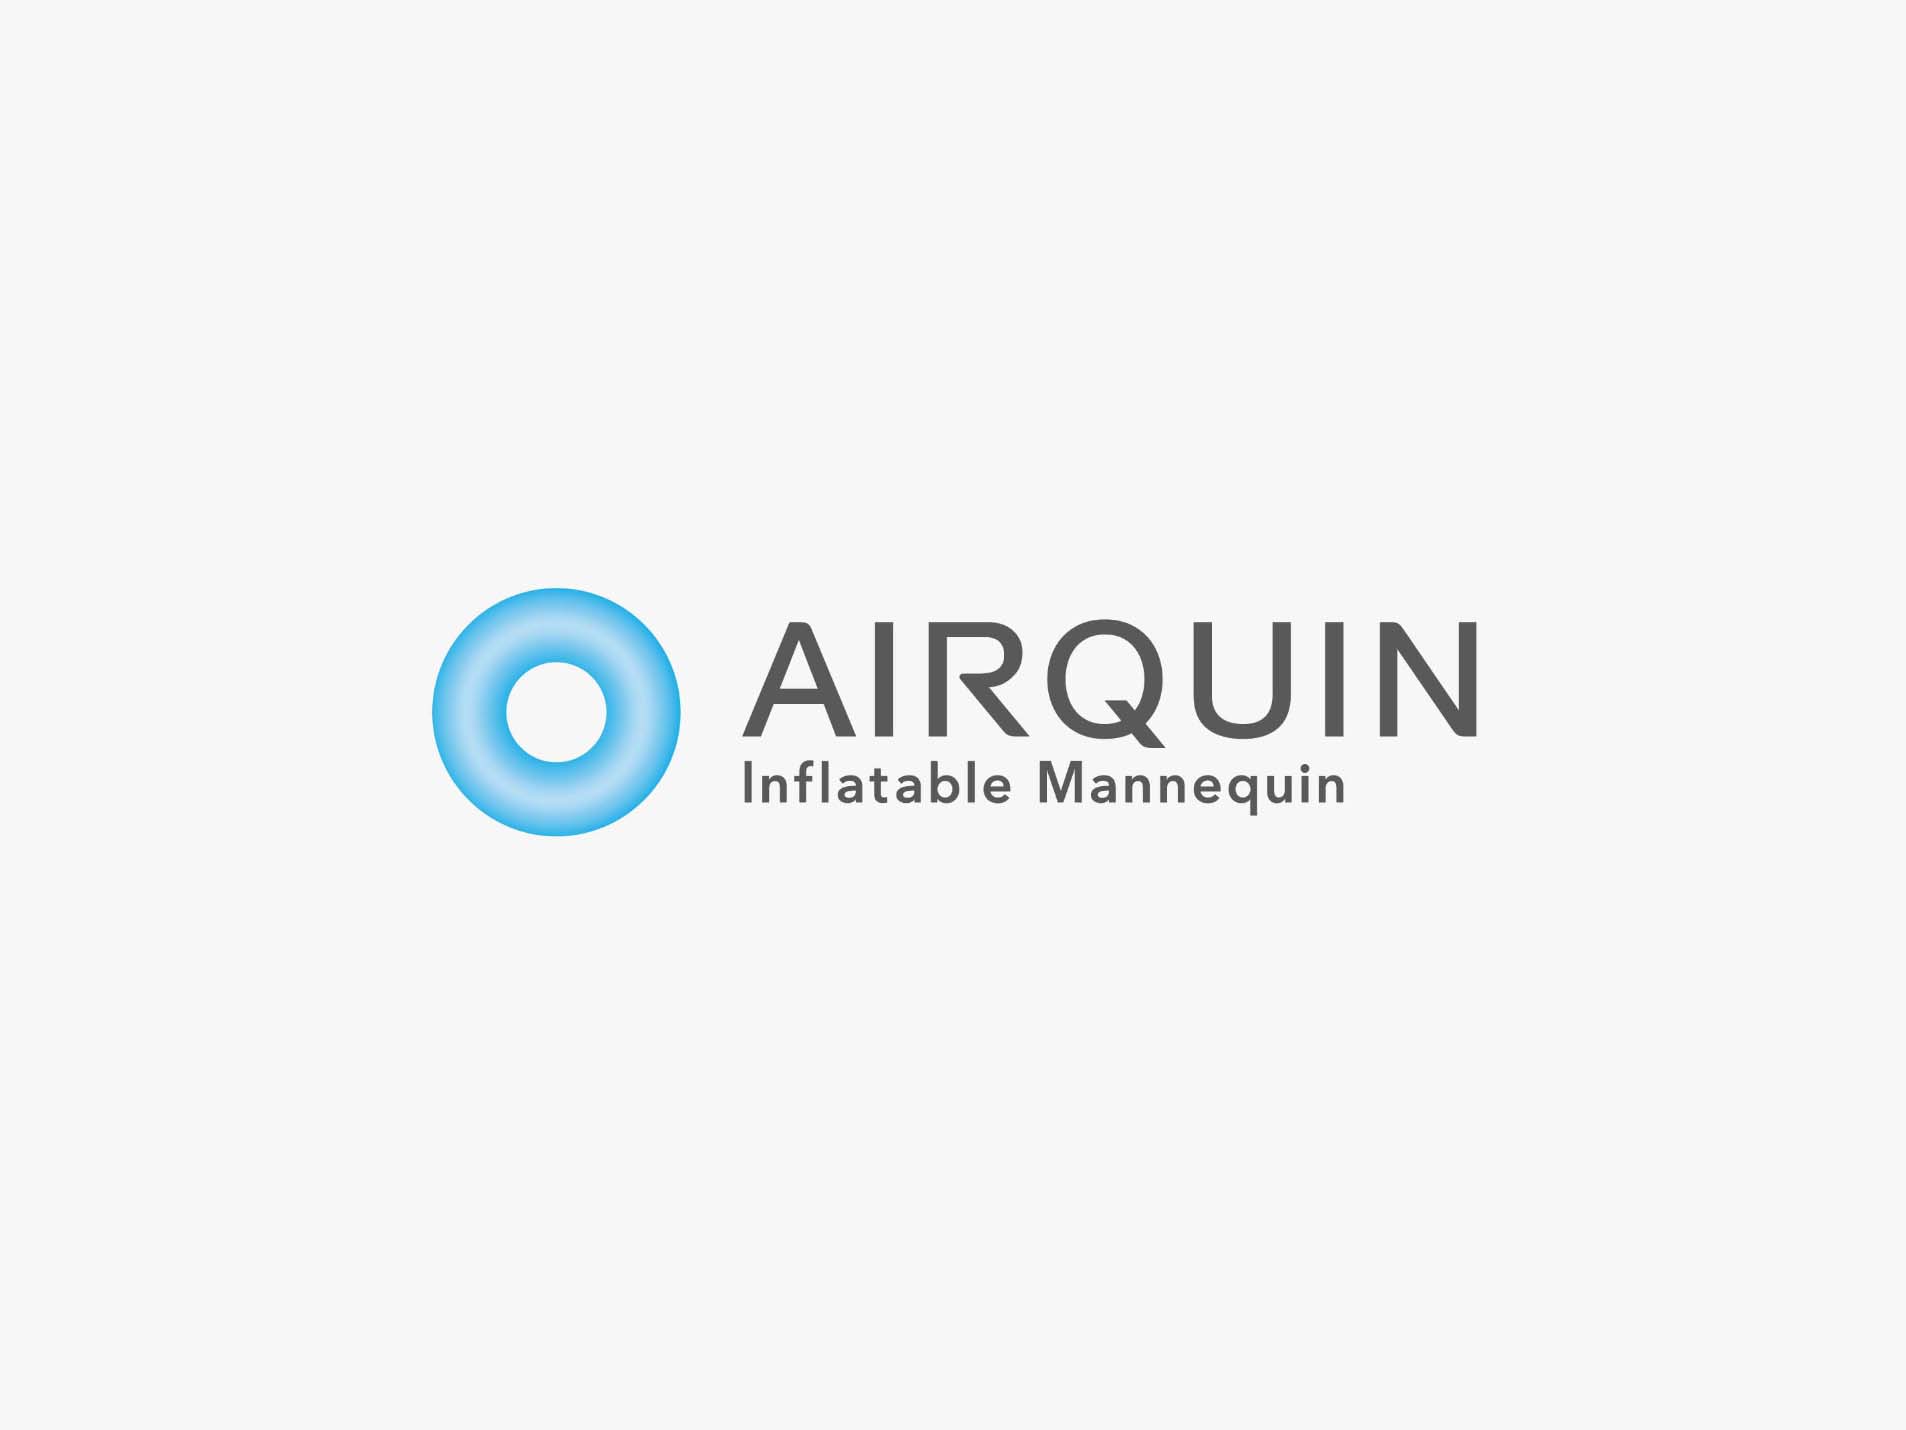 airquin branding